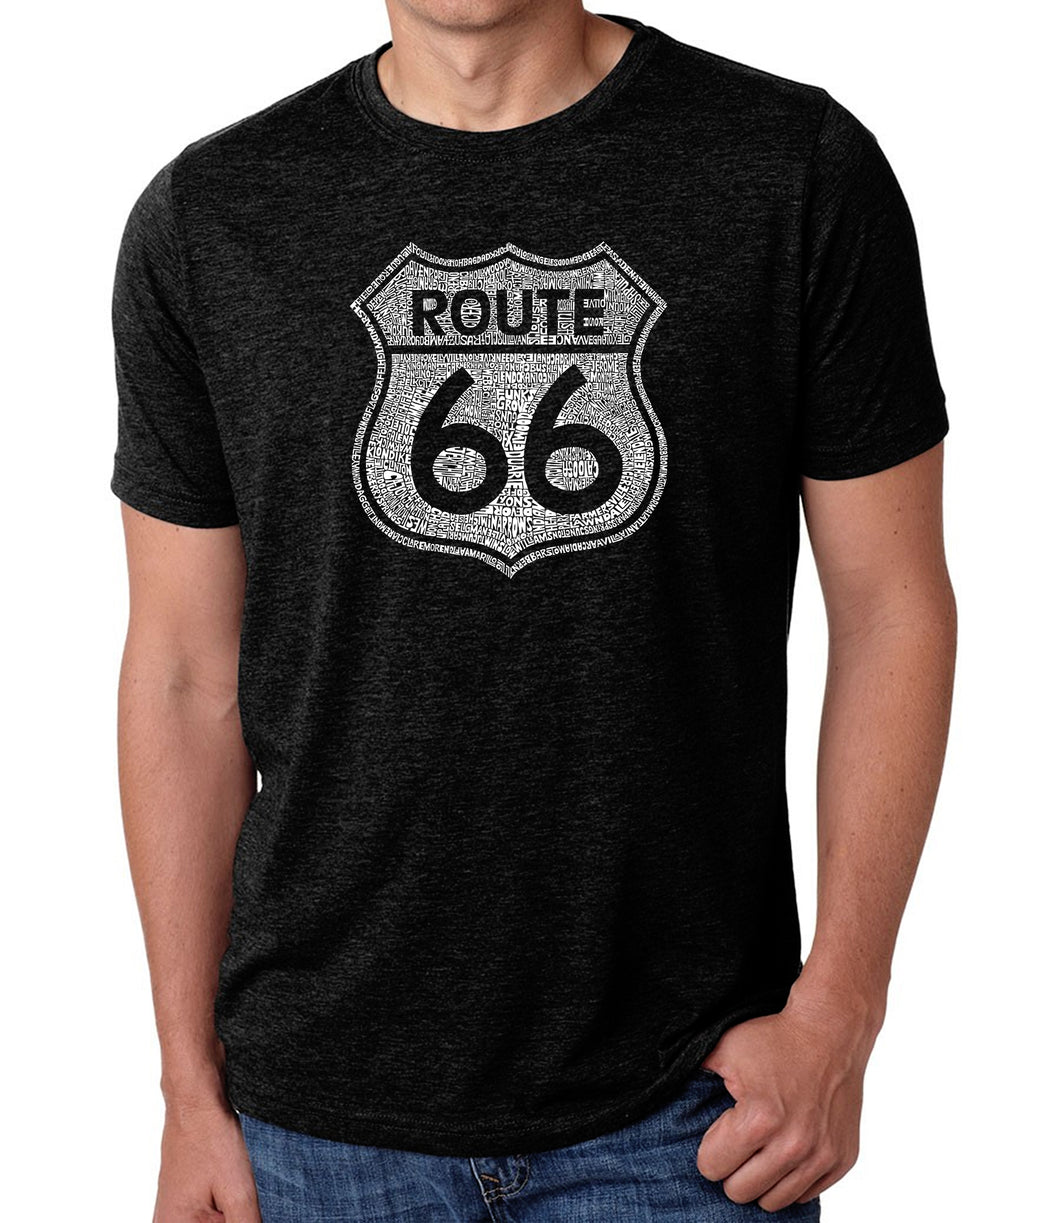 CITIES ALONG THE LEGENDARY ROUTE 66 - Men's Premium Blend Word Art T-Shirt